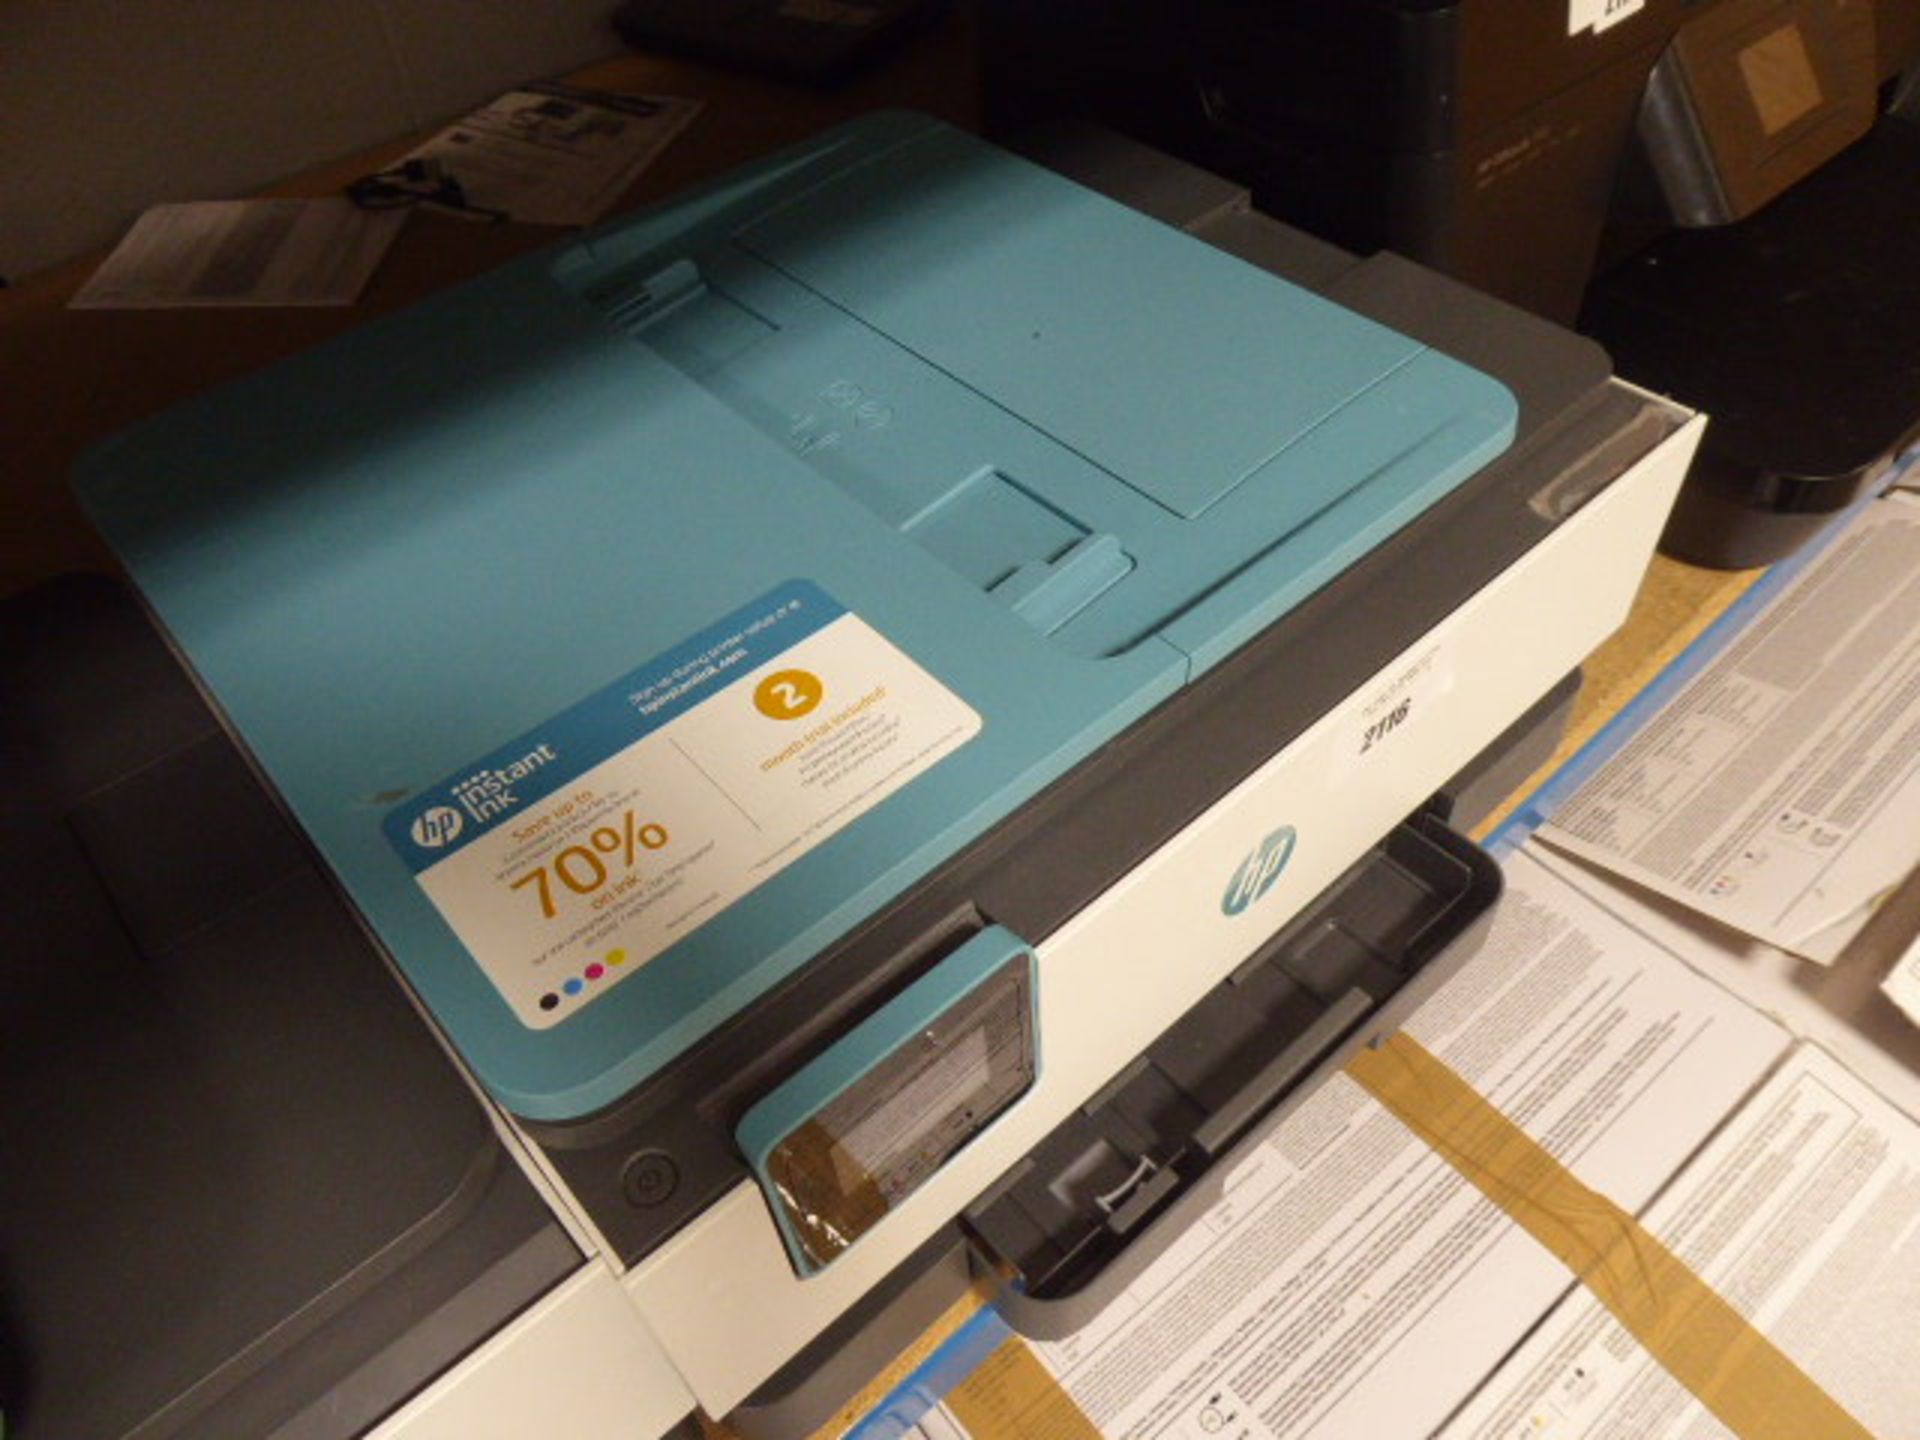 HP Officejet 8015 printer - Image 2 of 2